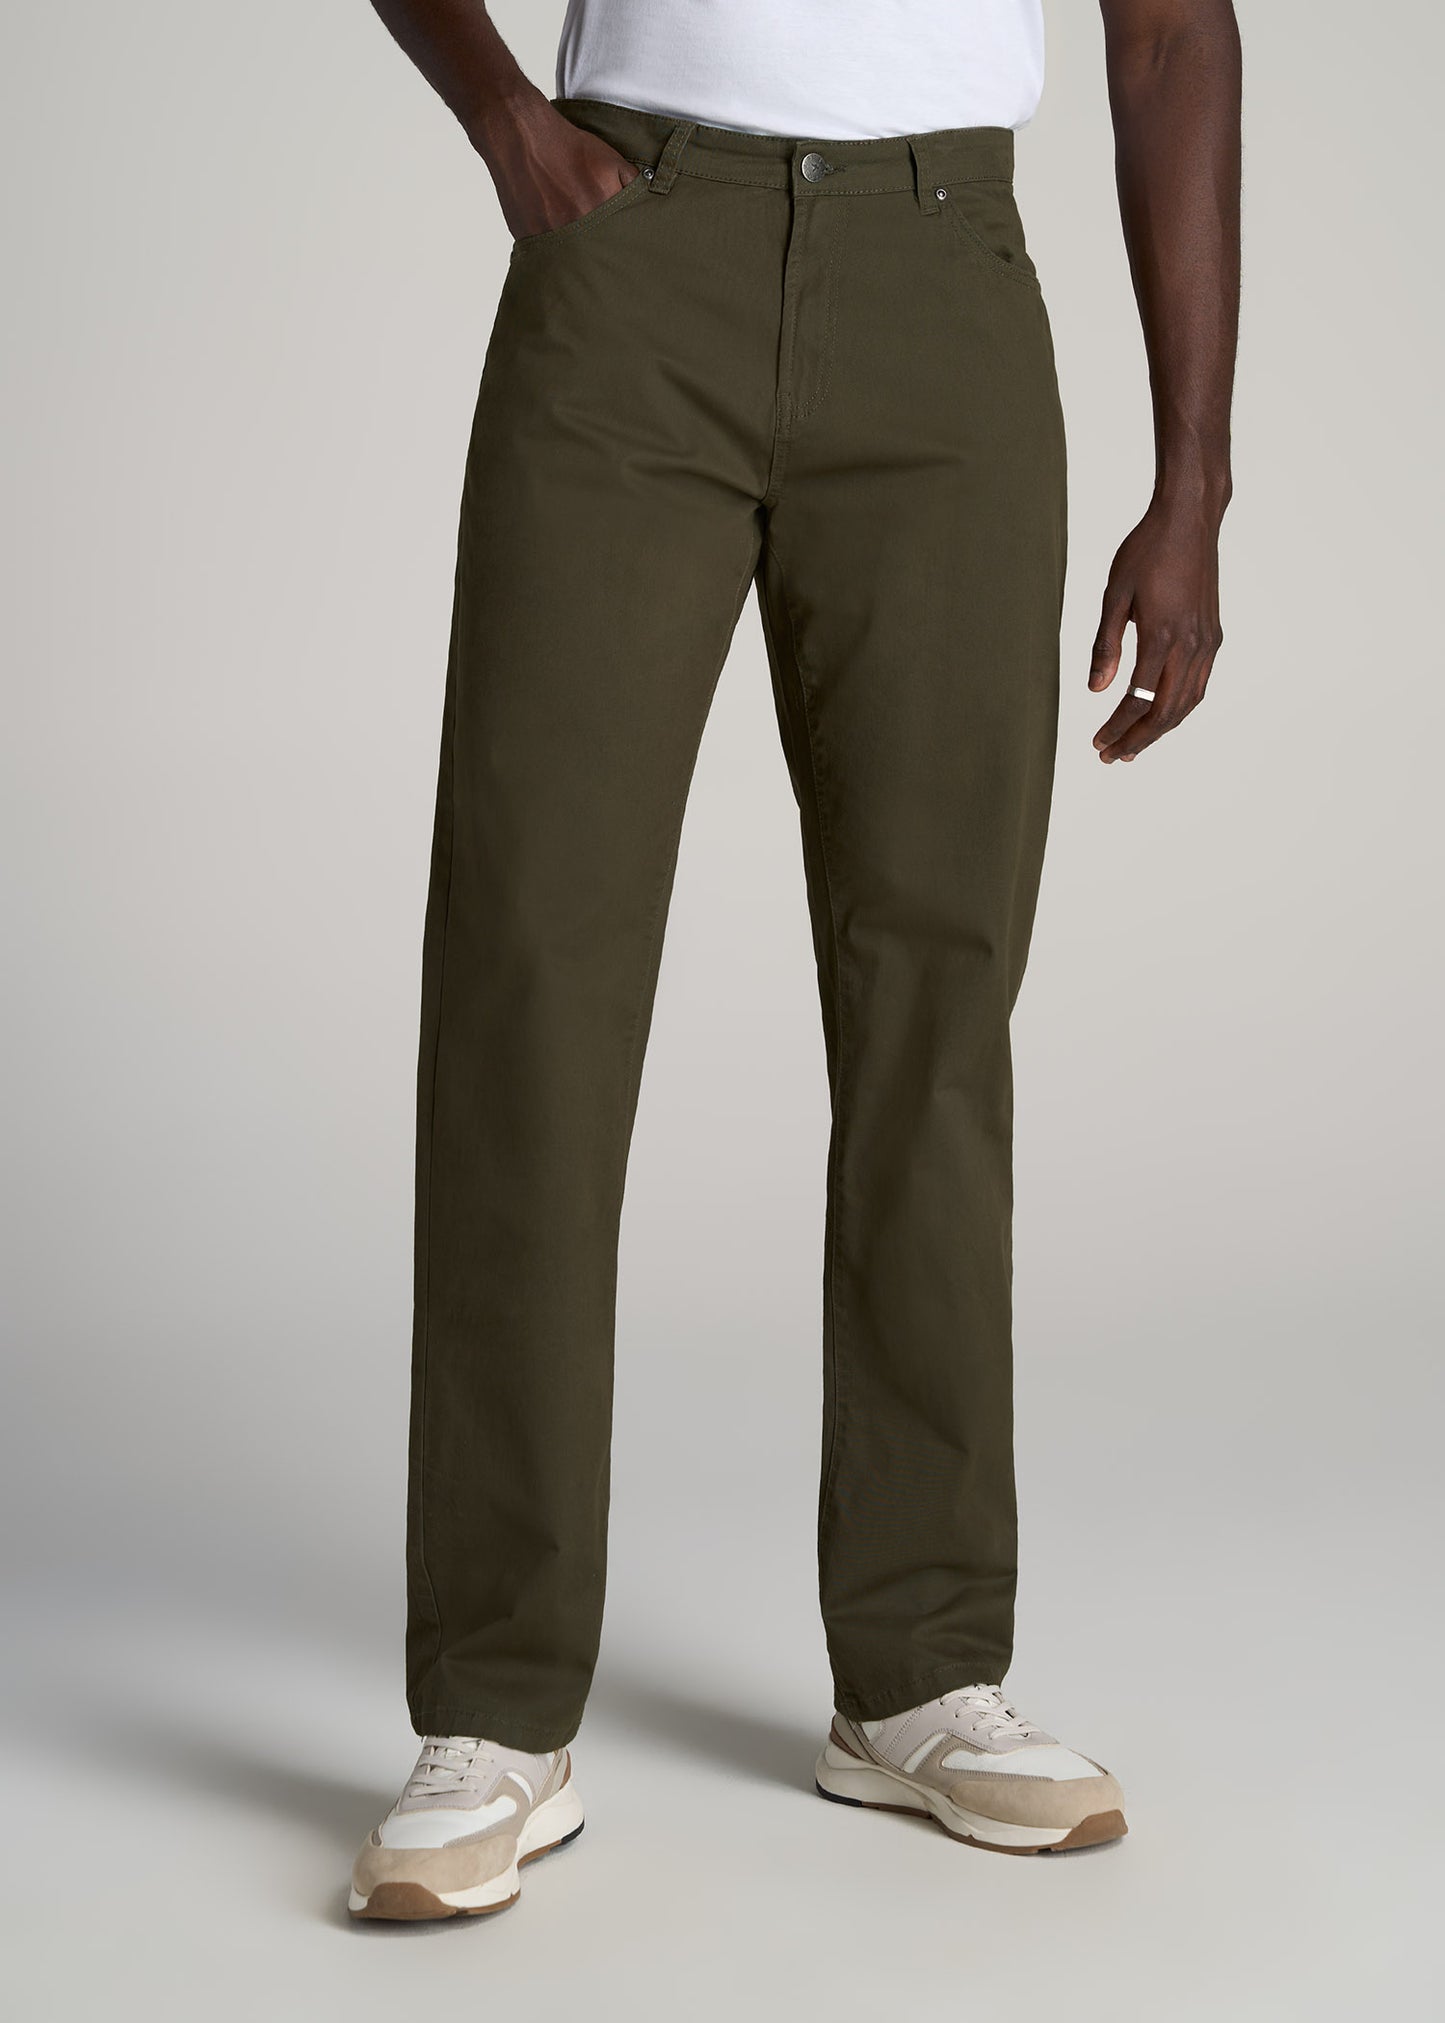       American-Tall-Men-J1-Five-Pocket-Camo-Green-front